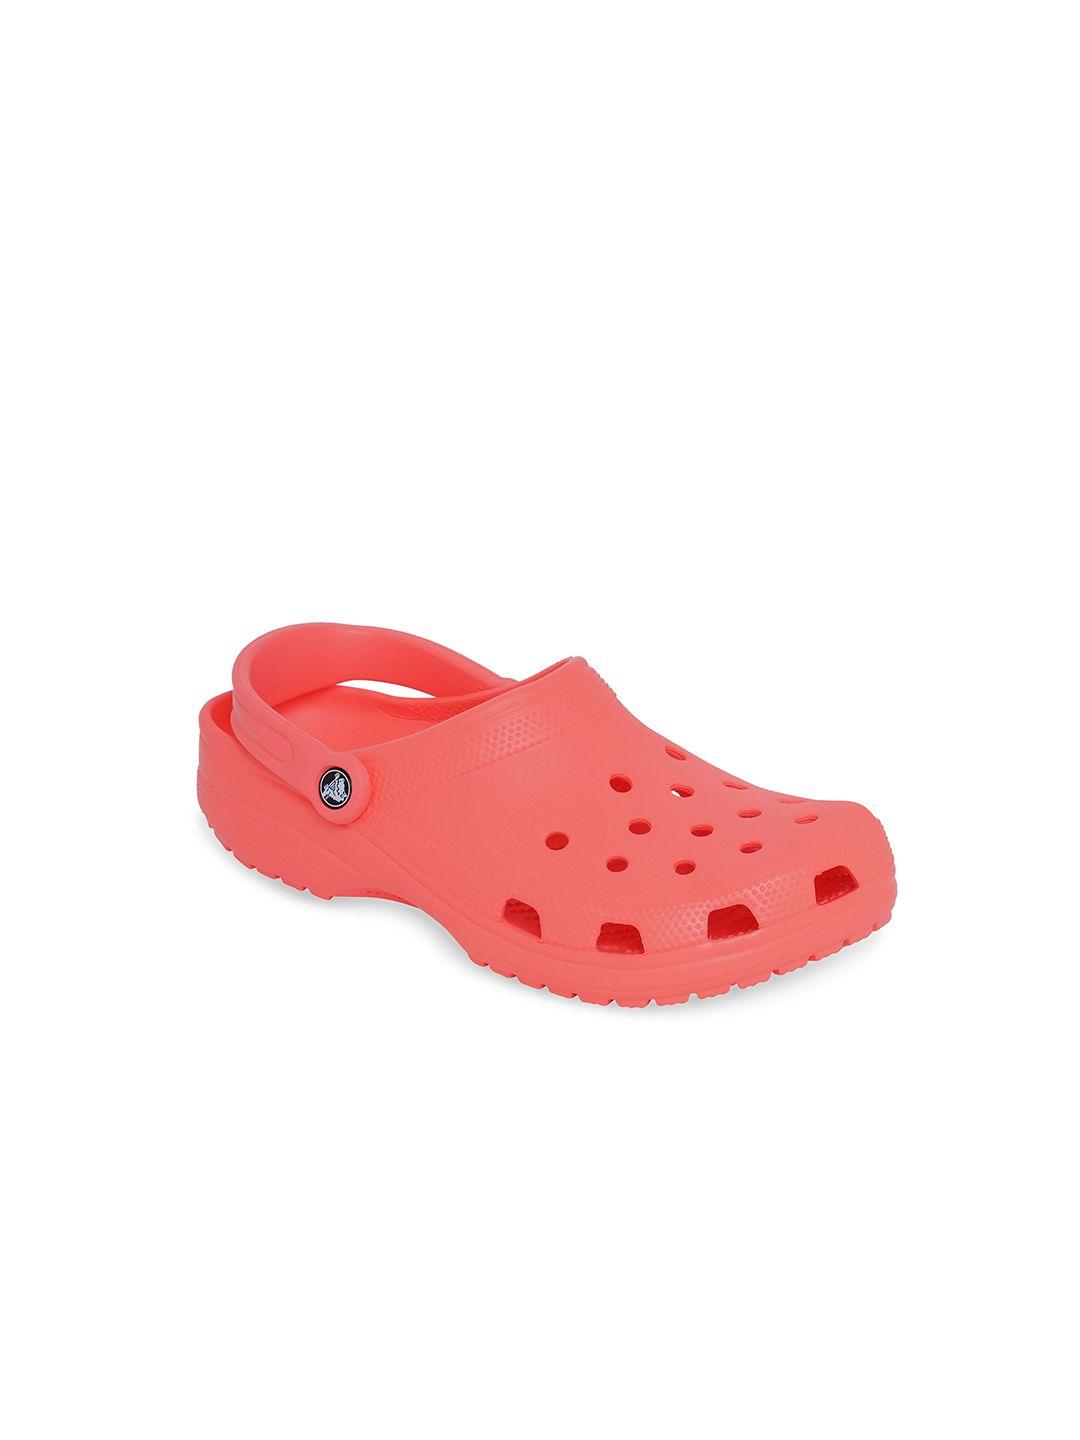 crocs classic  women pink solid odor-resistant clogs